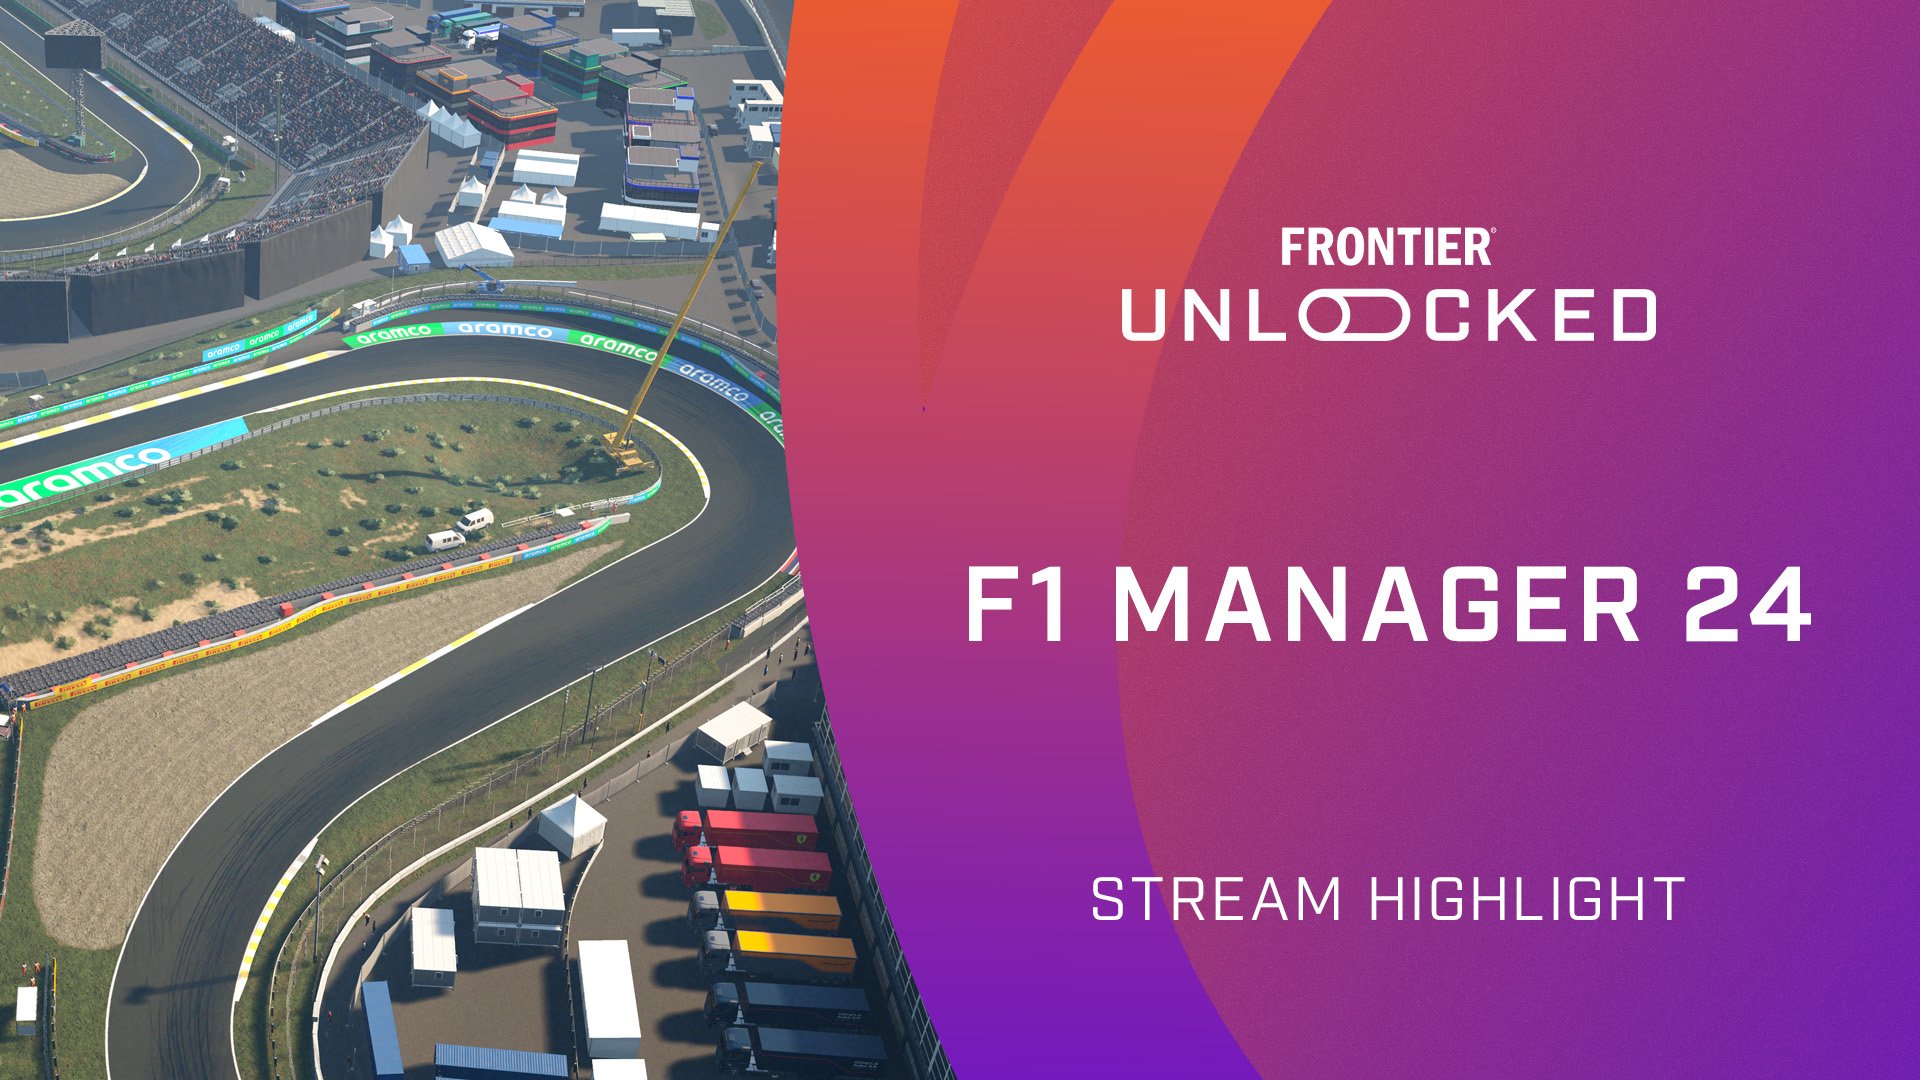 More information about "F1 Manager 24 si presenta in video con varie novità"